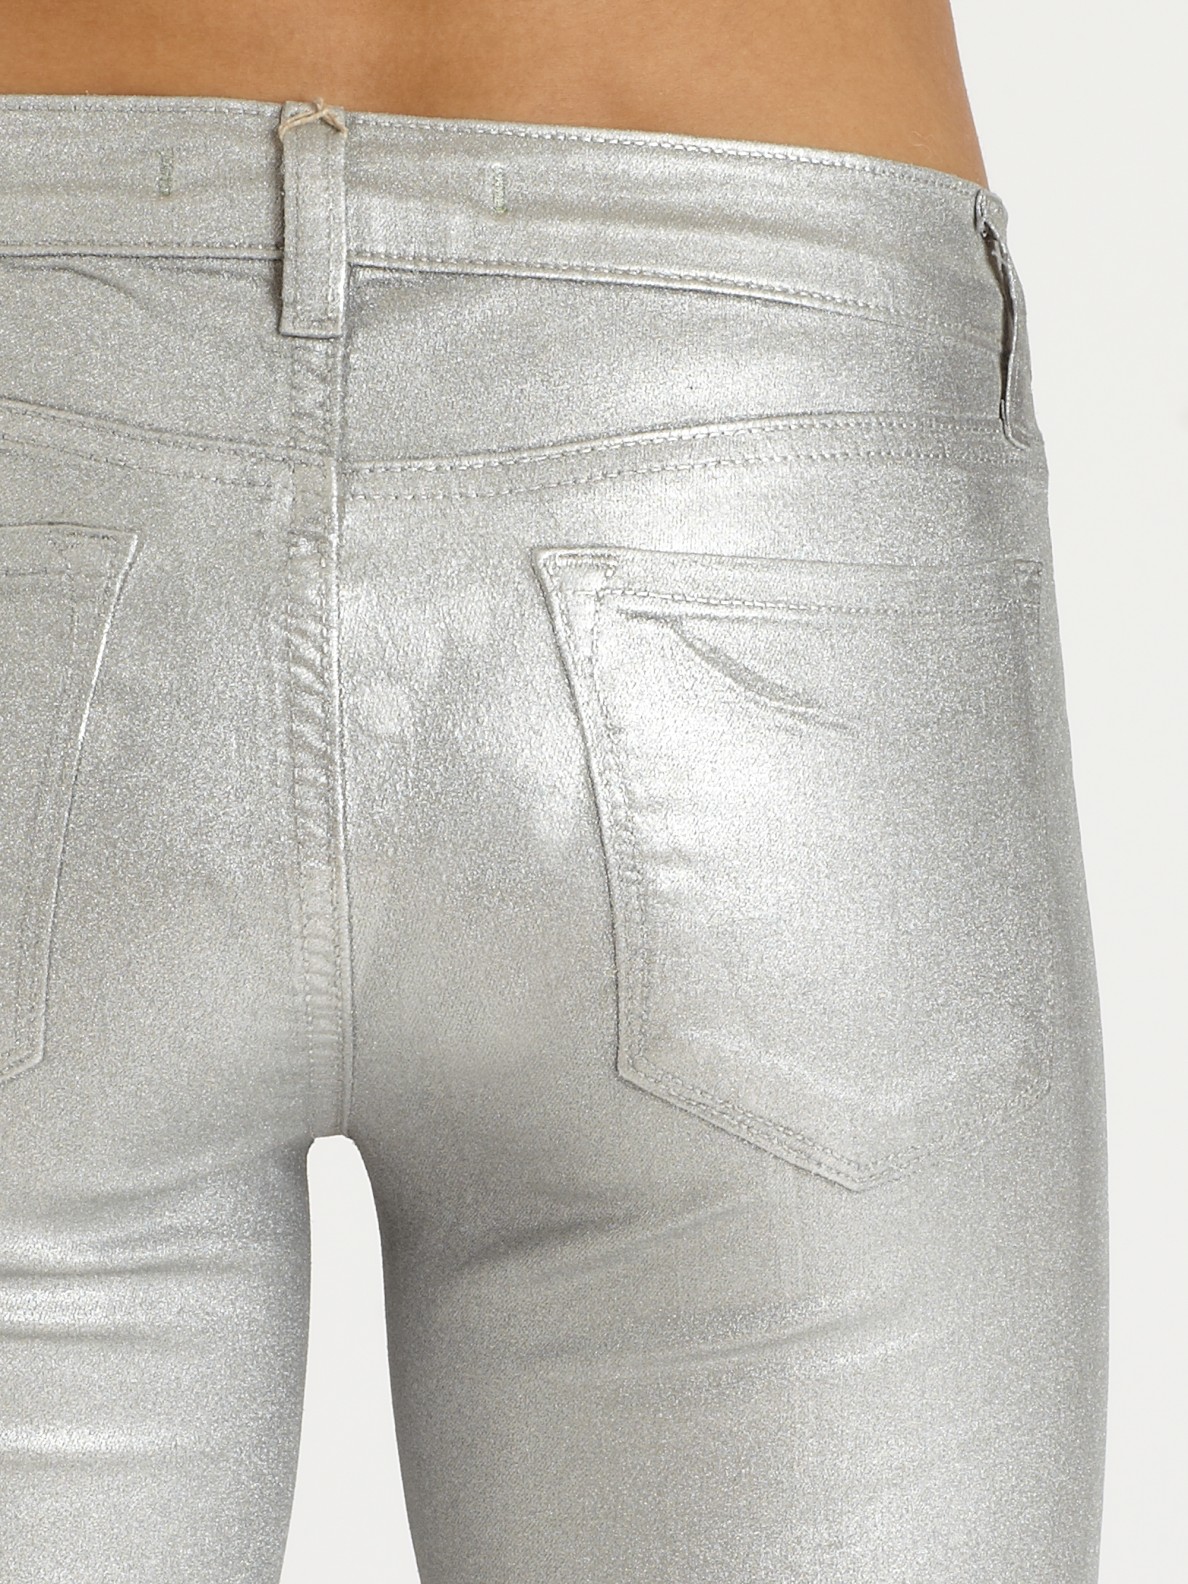 J Brand 901 Super Skinny Coated Jeans in Metallic | Lyst